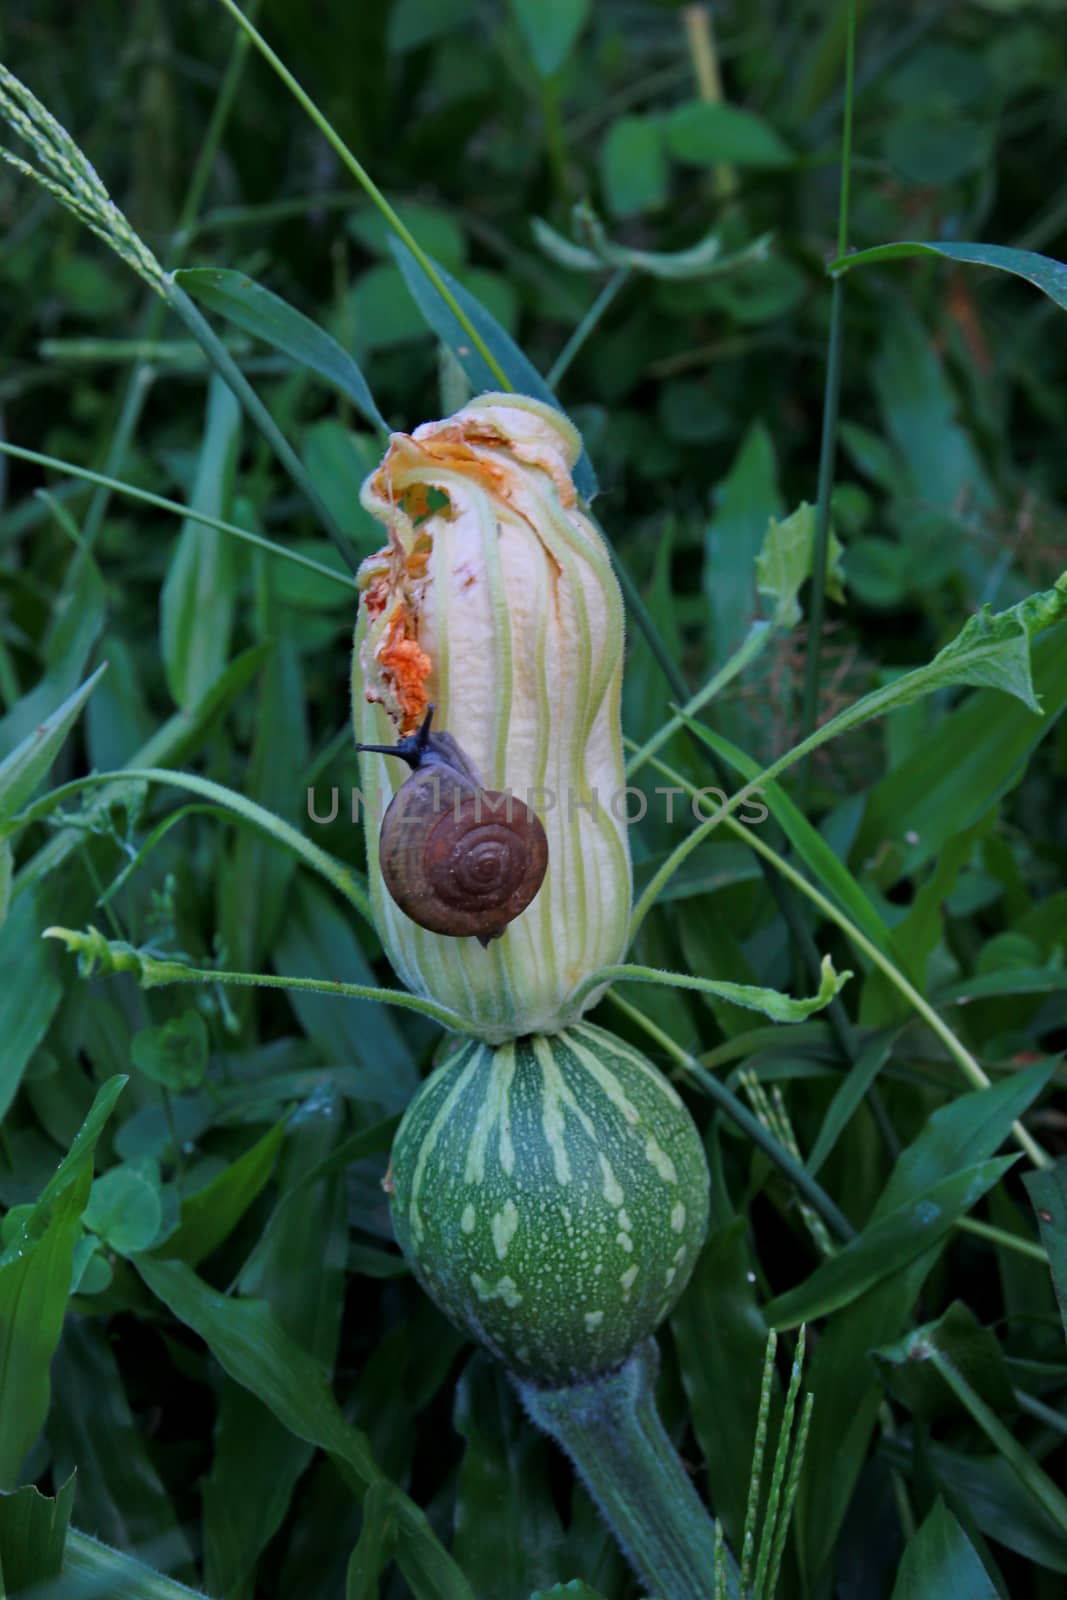 snail eating pumpkin flower by kaidevil